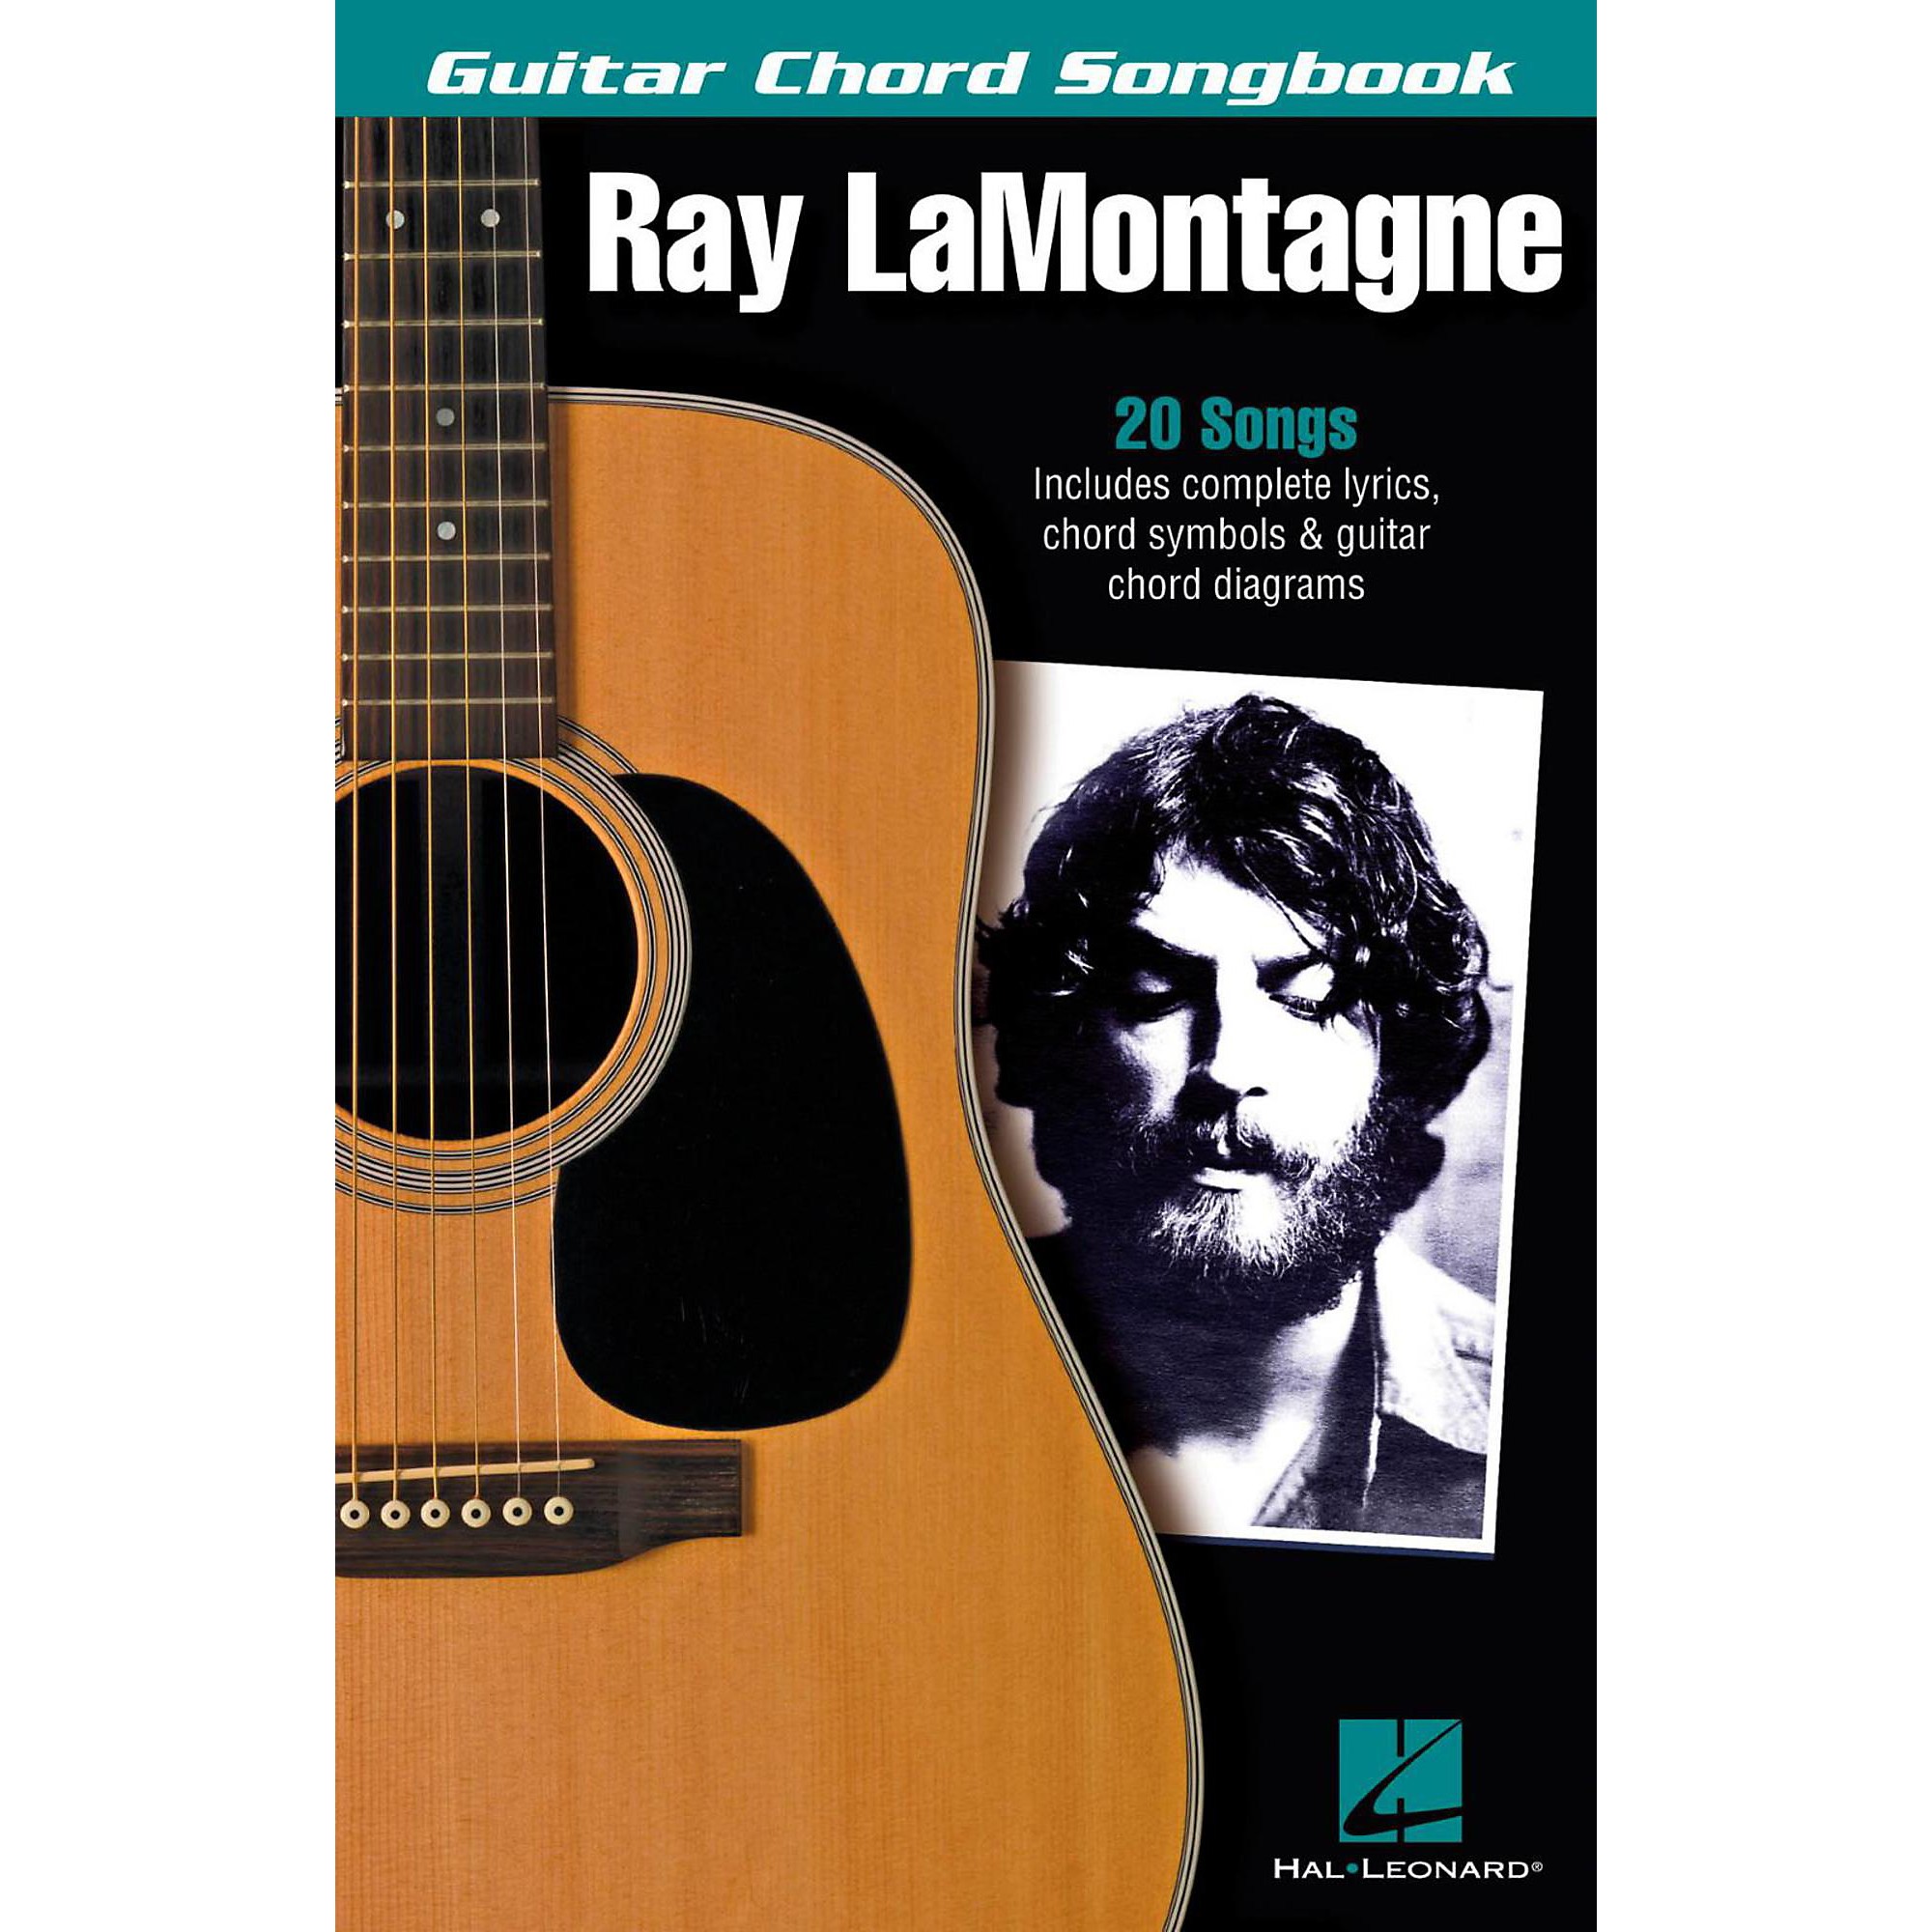 Ray Lamontagne - Trouble: lyrics and songs